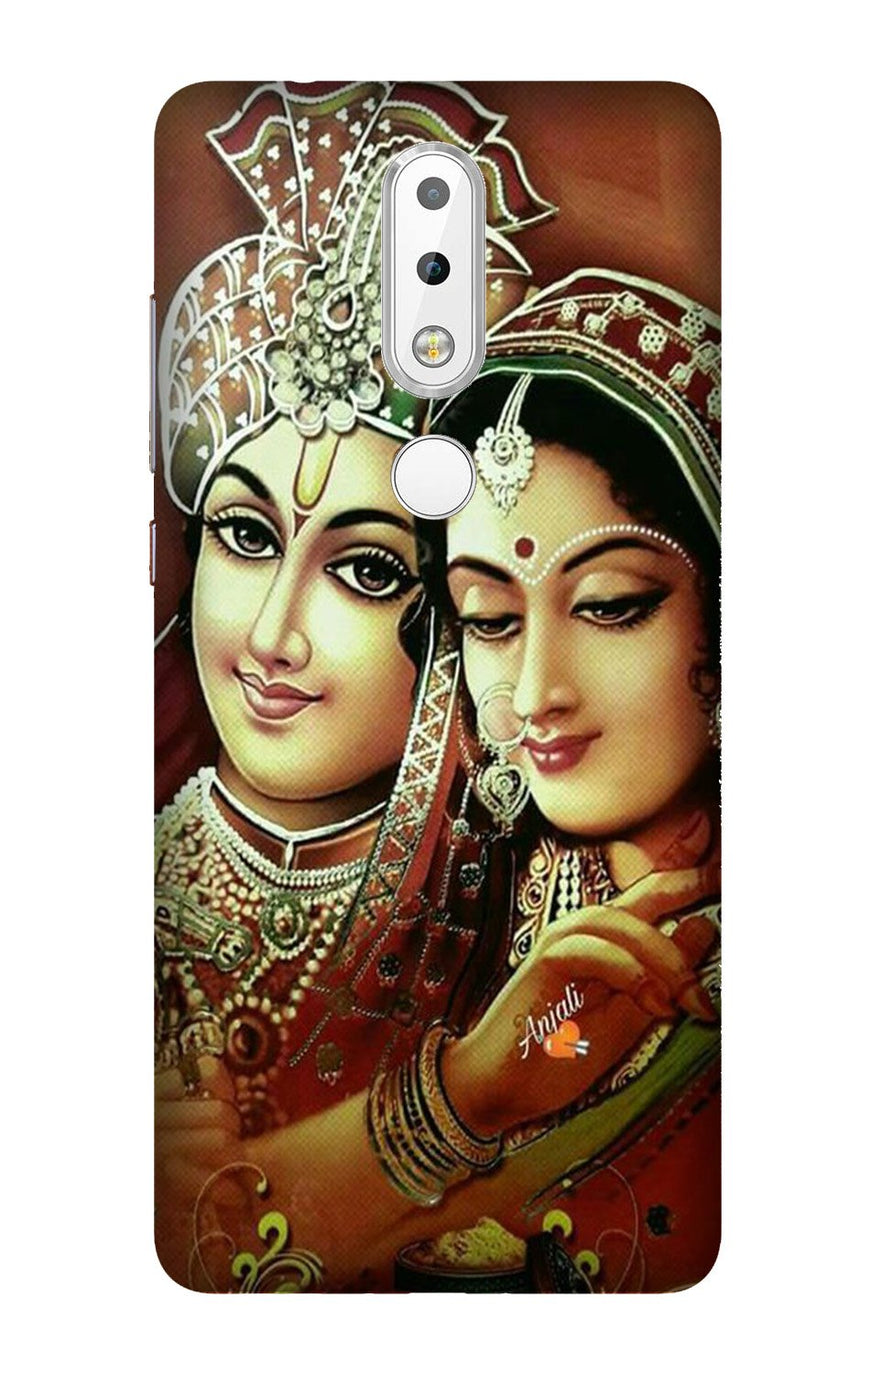 Radha Krishna Case for Nokia 3.1 Plus (Design No. 289)